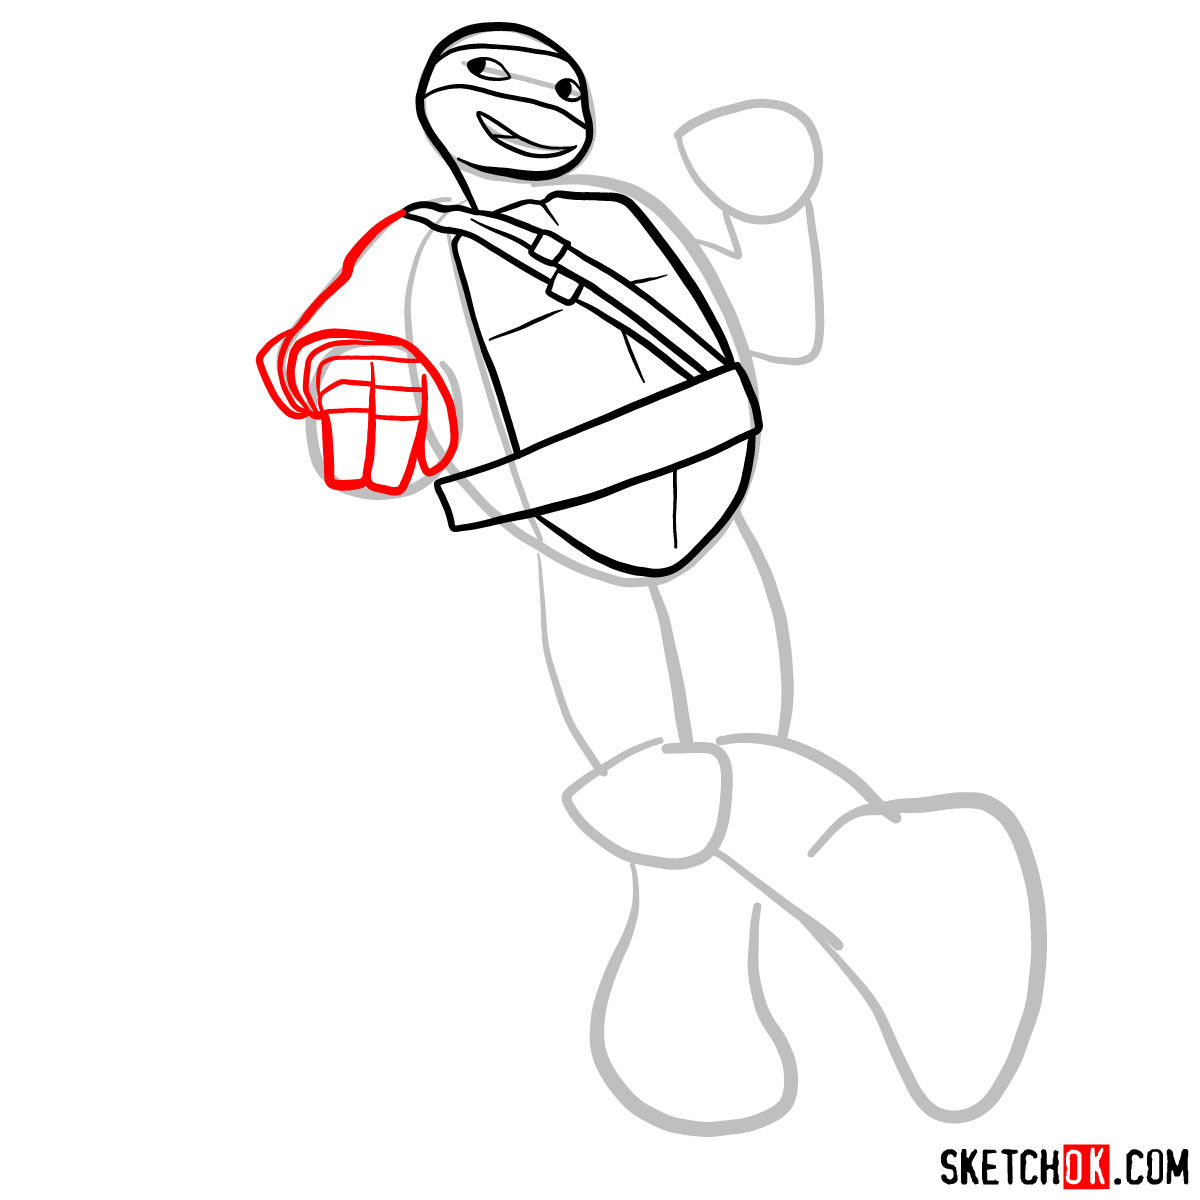 How to draw Leonardo ninja turtle cartoon style - step 05